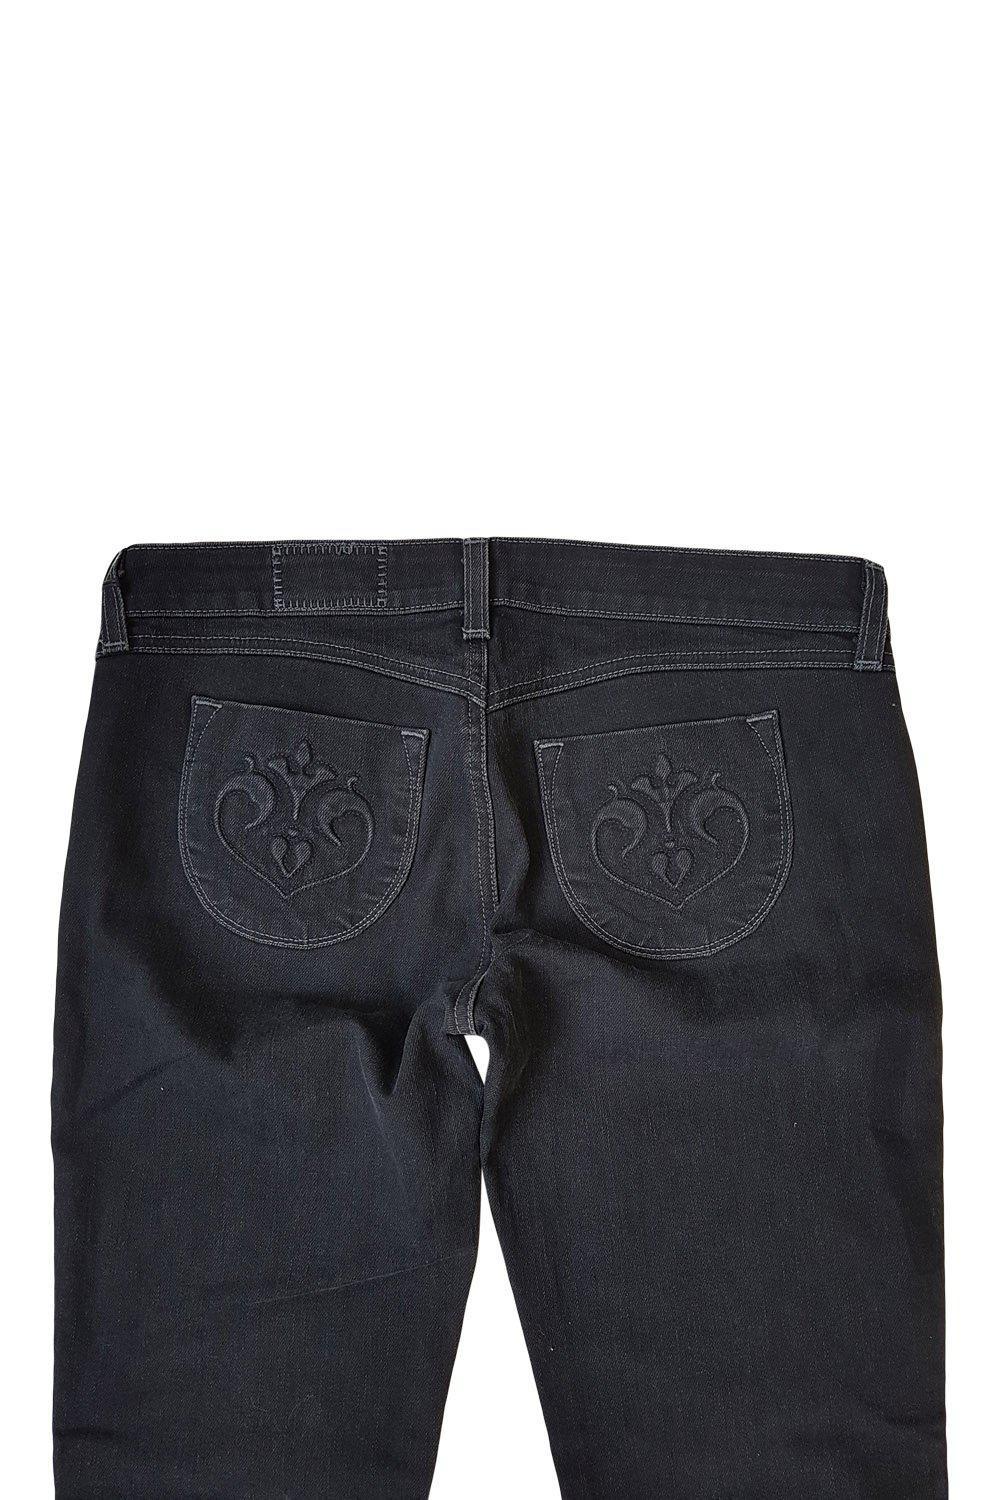 SIWY Abbey Lee Ankle Peg Jeans in Kinetic Grey (W29 L29.5)-Siwy-The Freperie